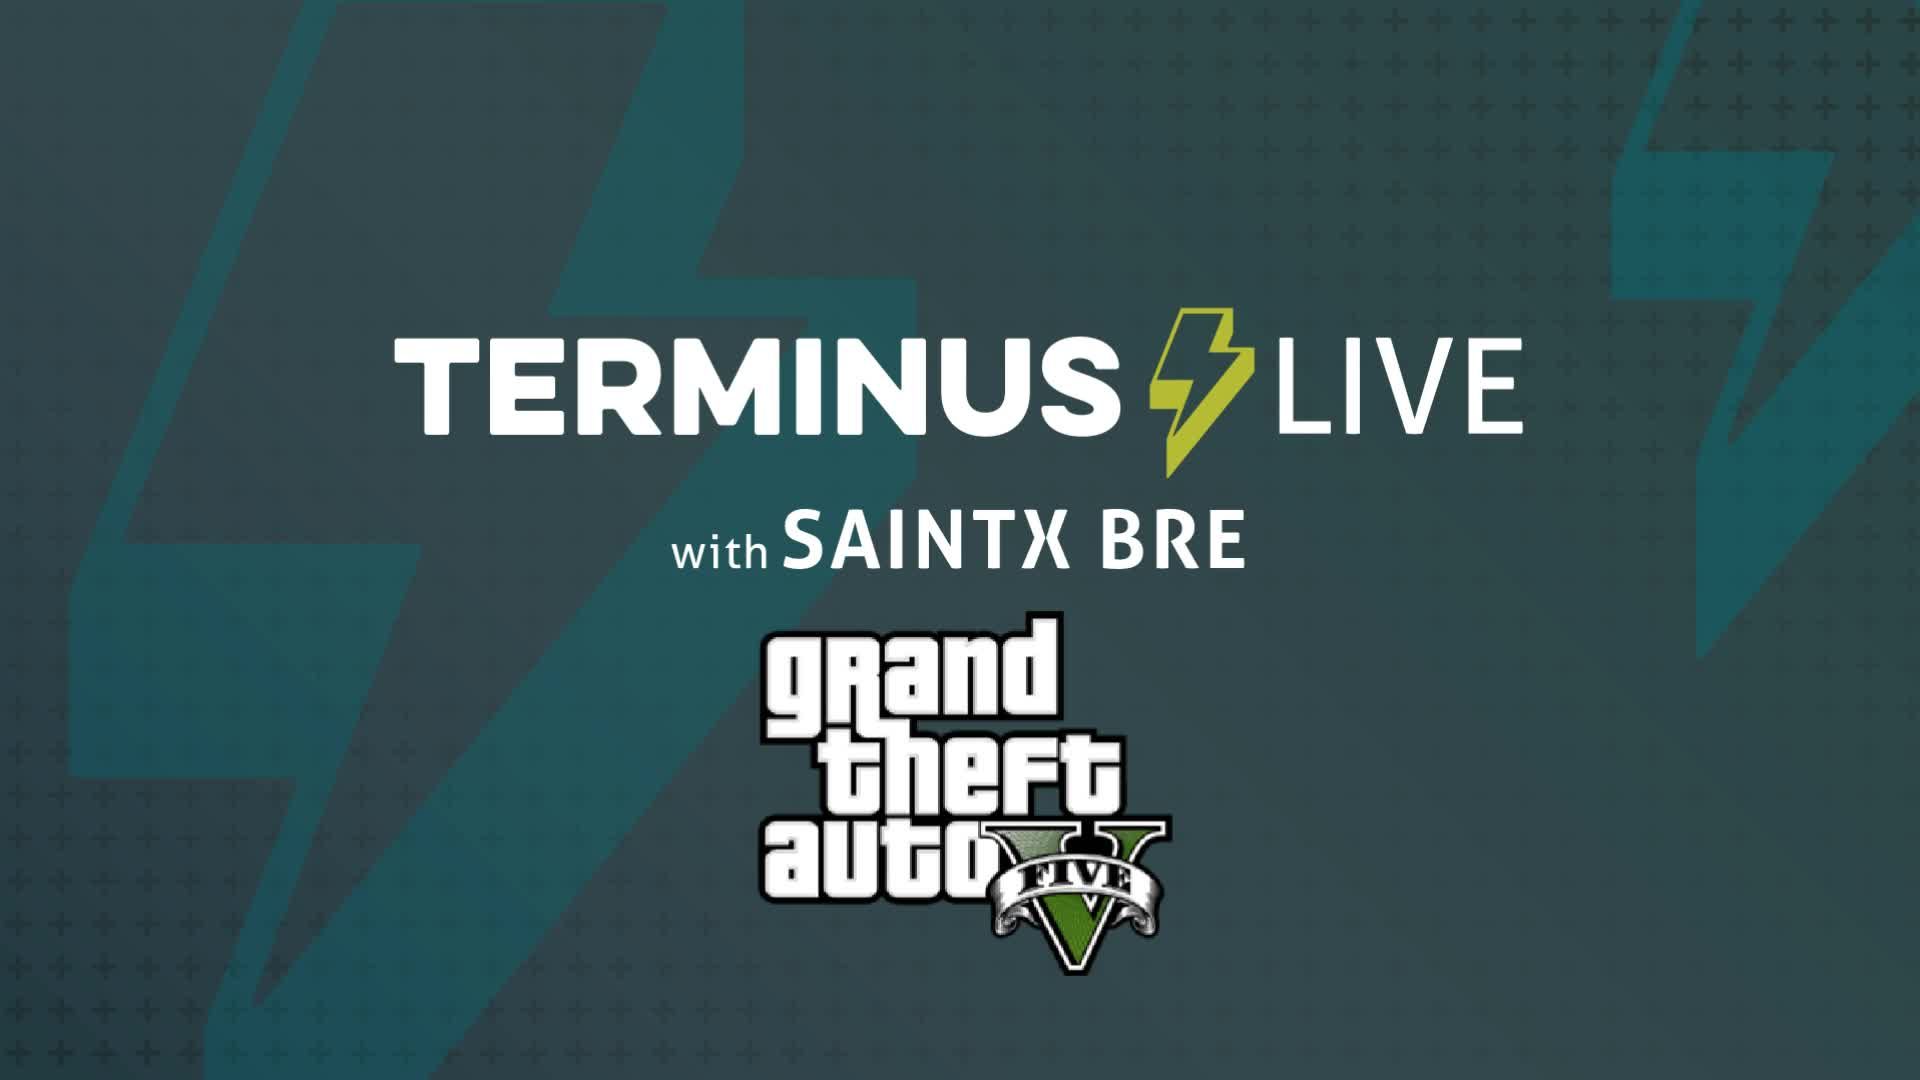 TERMINUS Live: SaintxBre plays Grand Theft Auto 5